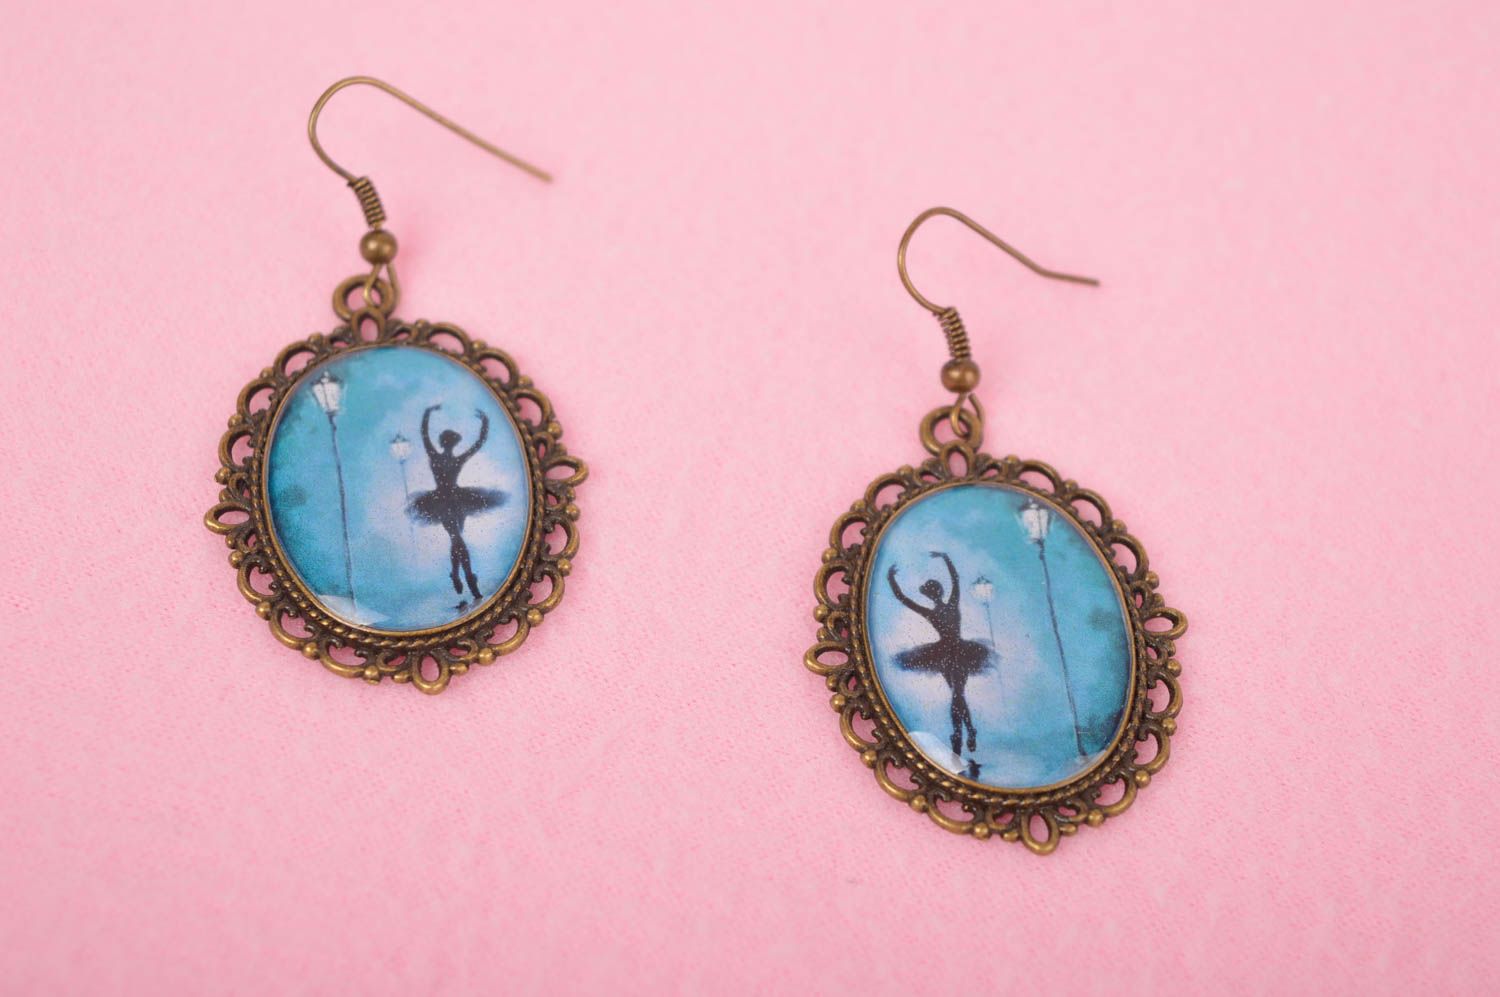 Handmade earrings designer jewelry fashion earrings gifts for girls cool jewelry photo 1